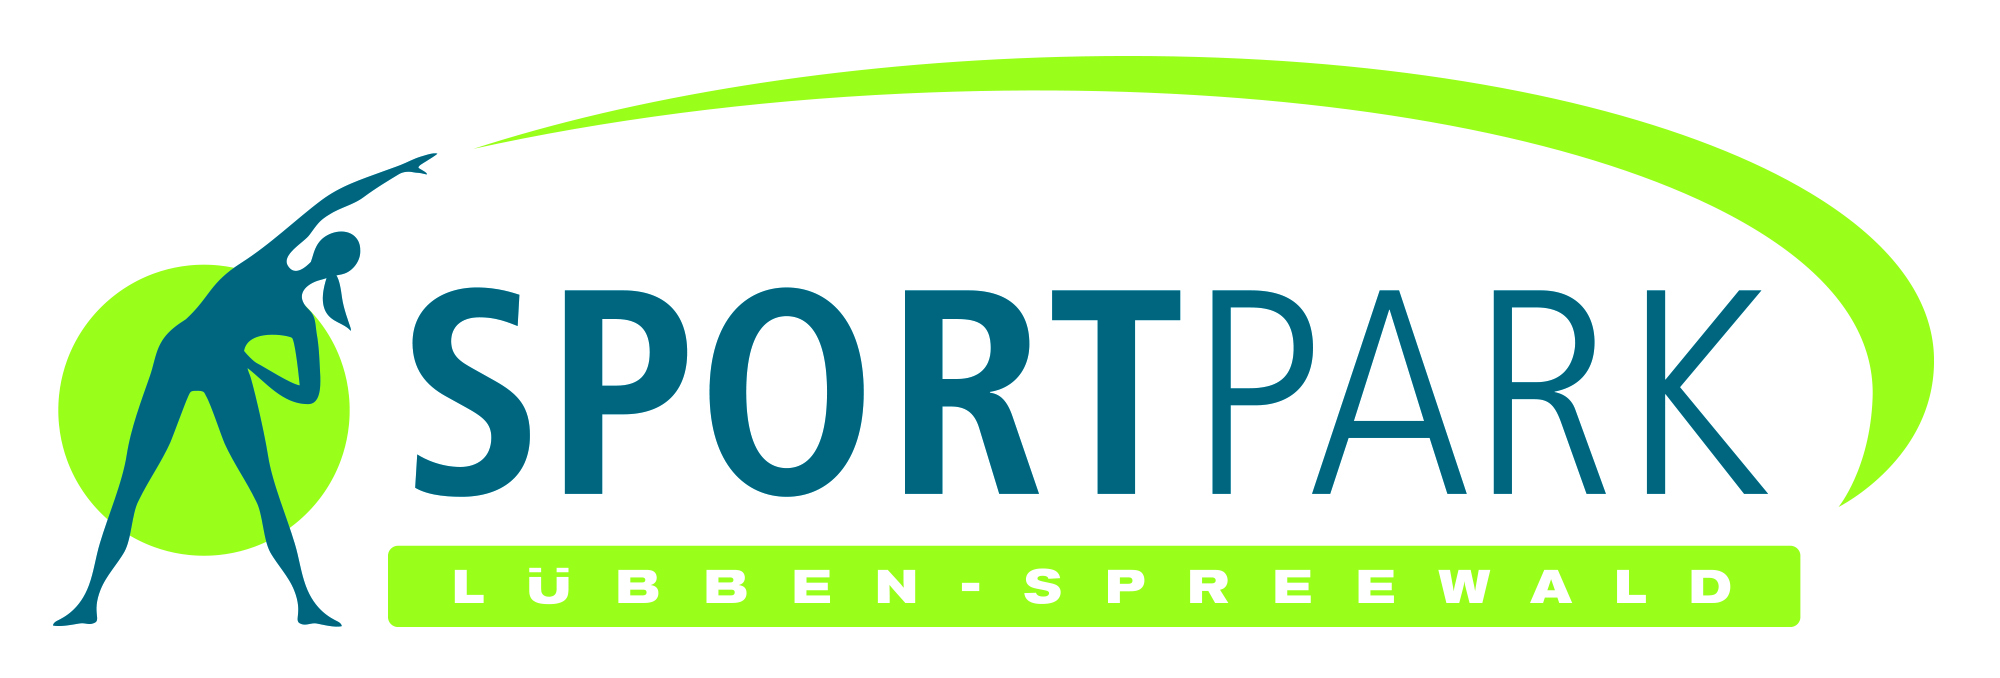 Sportpark lubben logo cmyk